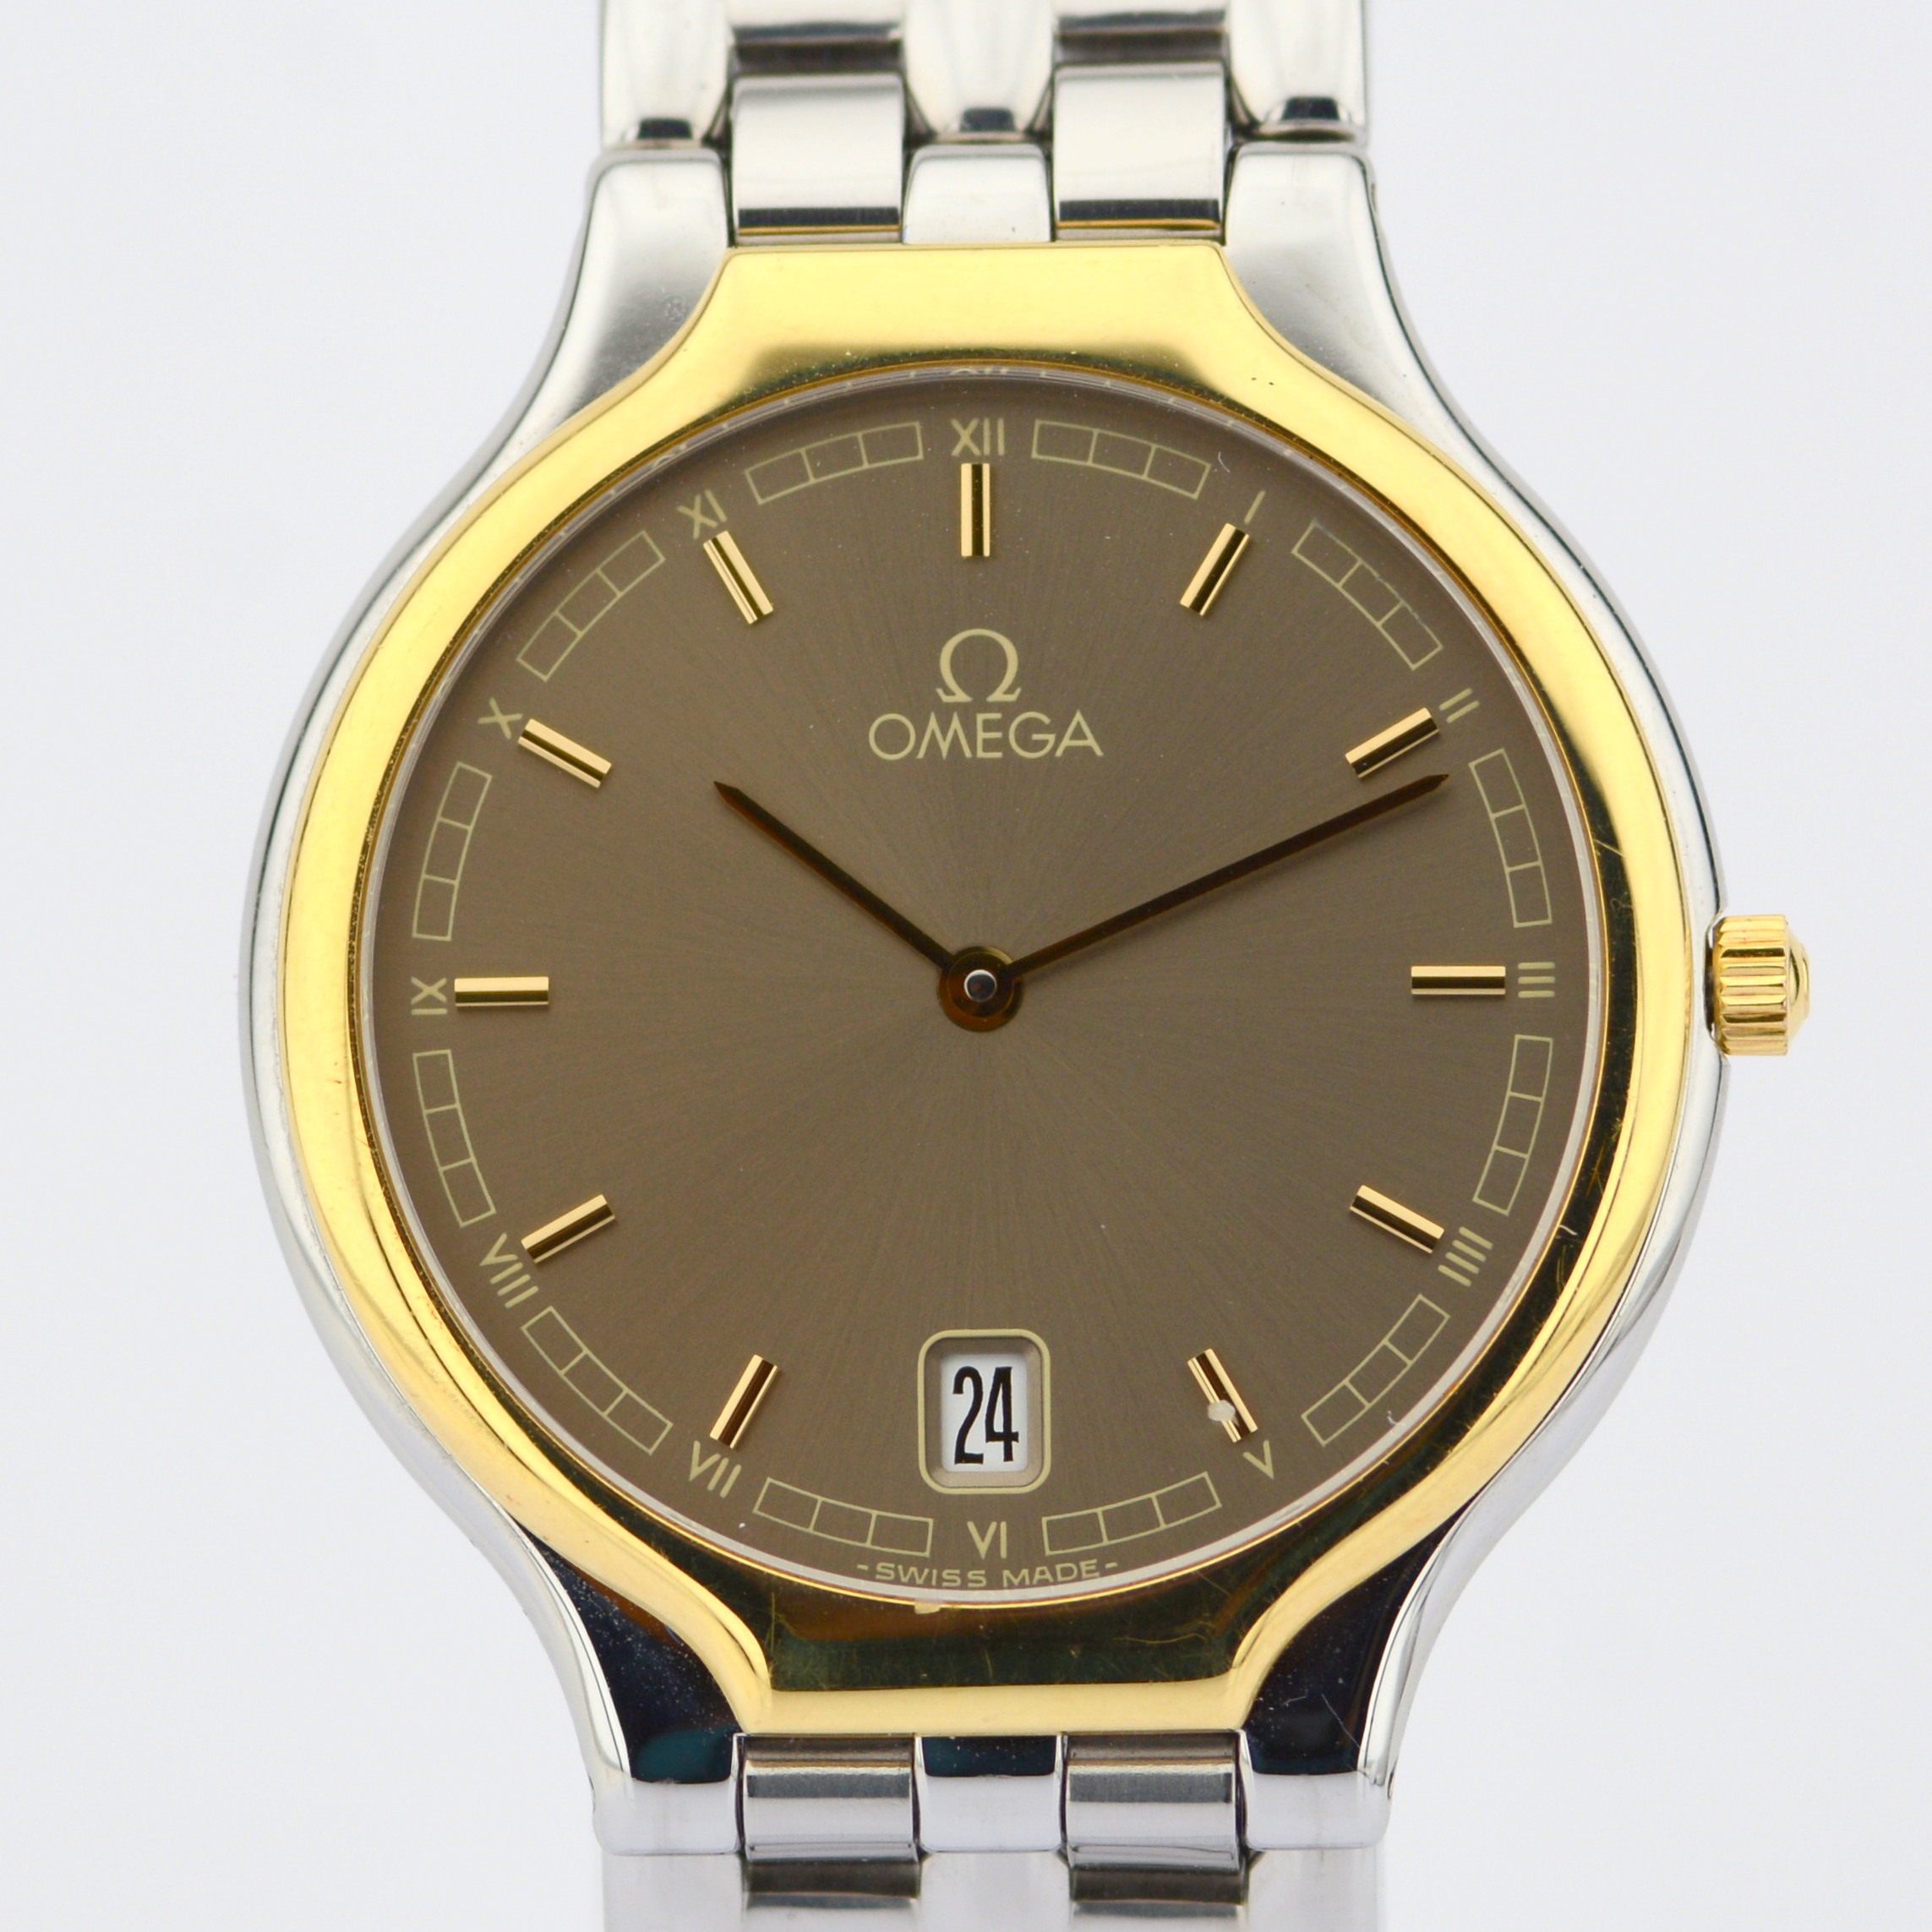 Omega / De Ville Symbol 18K Yellow gold Date - UNWORN - Gentlmen's Gold/Steel Wrist Watch